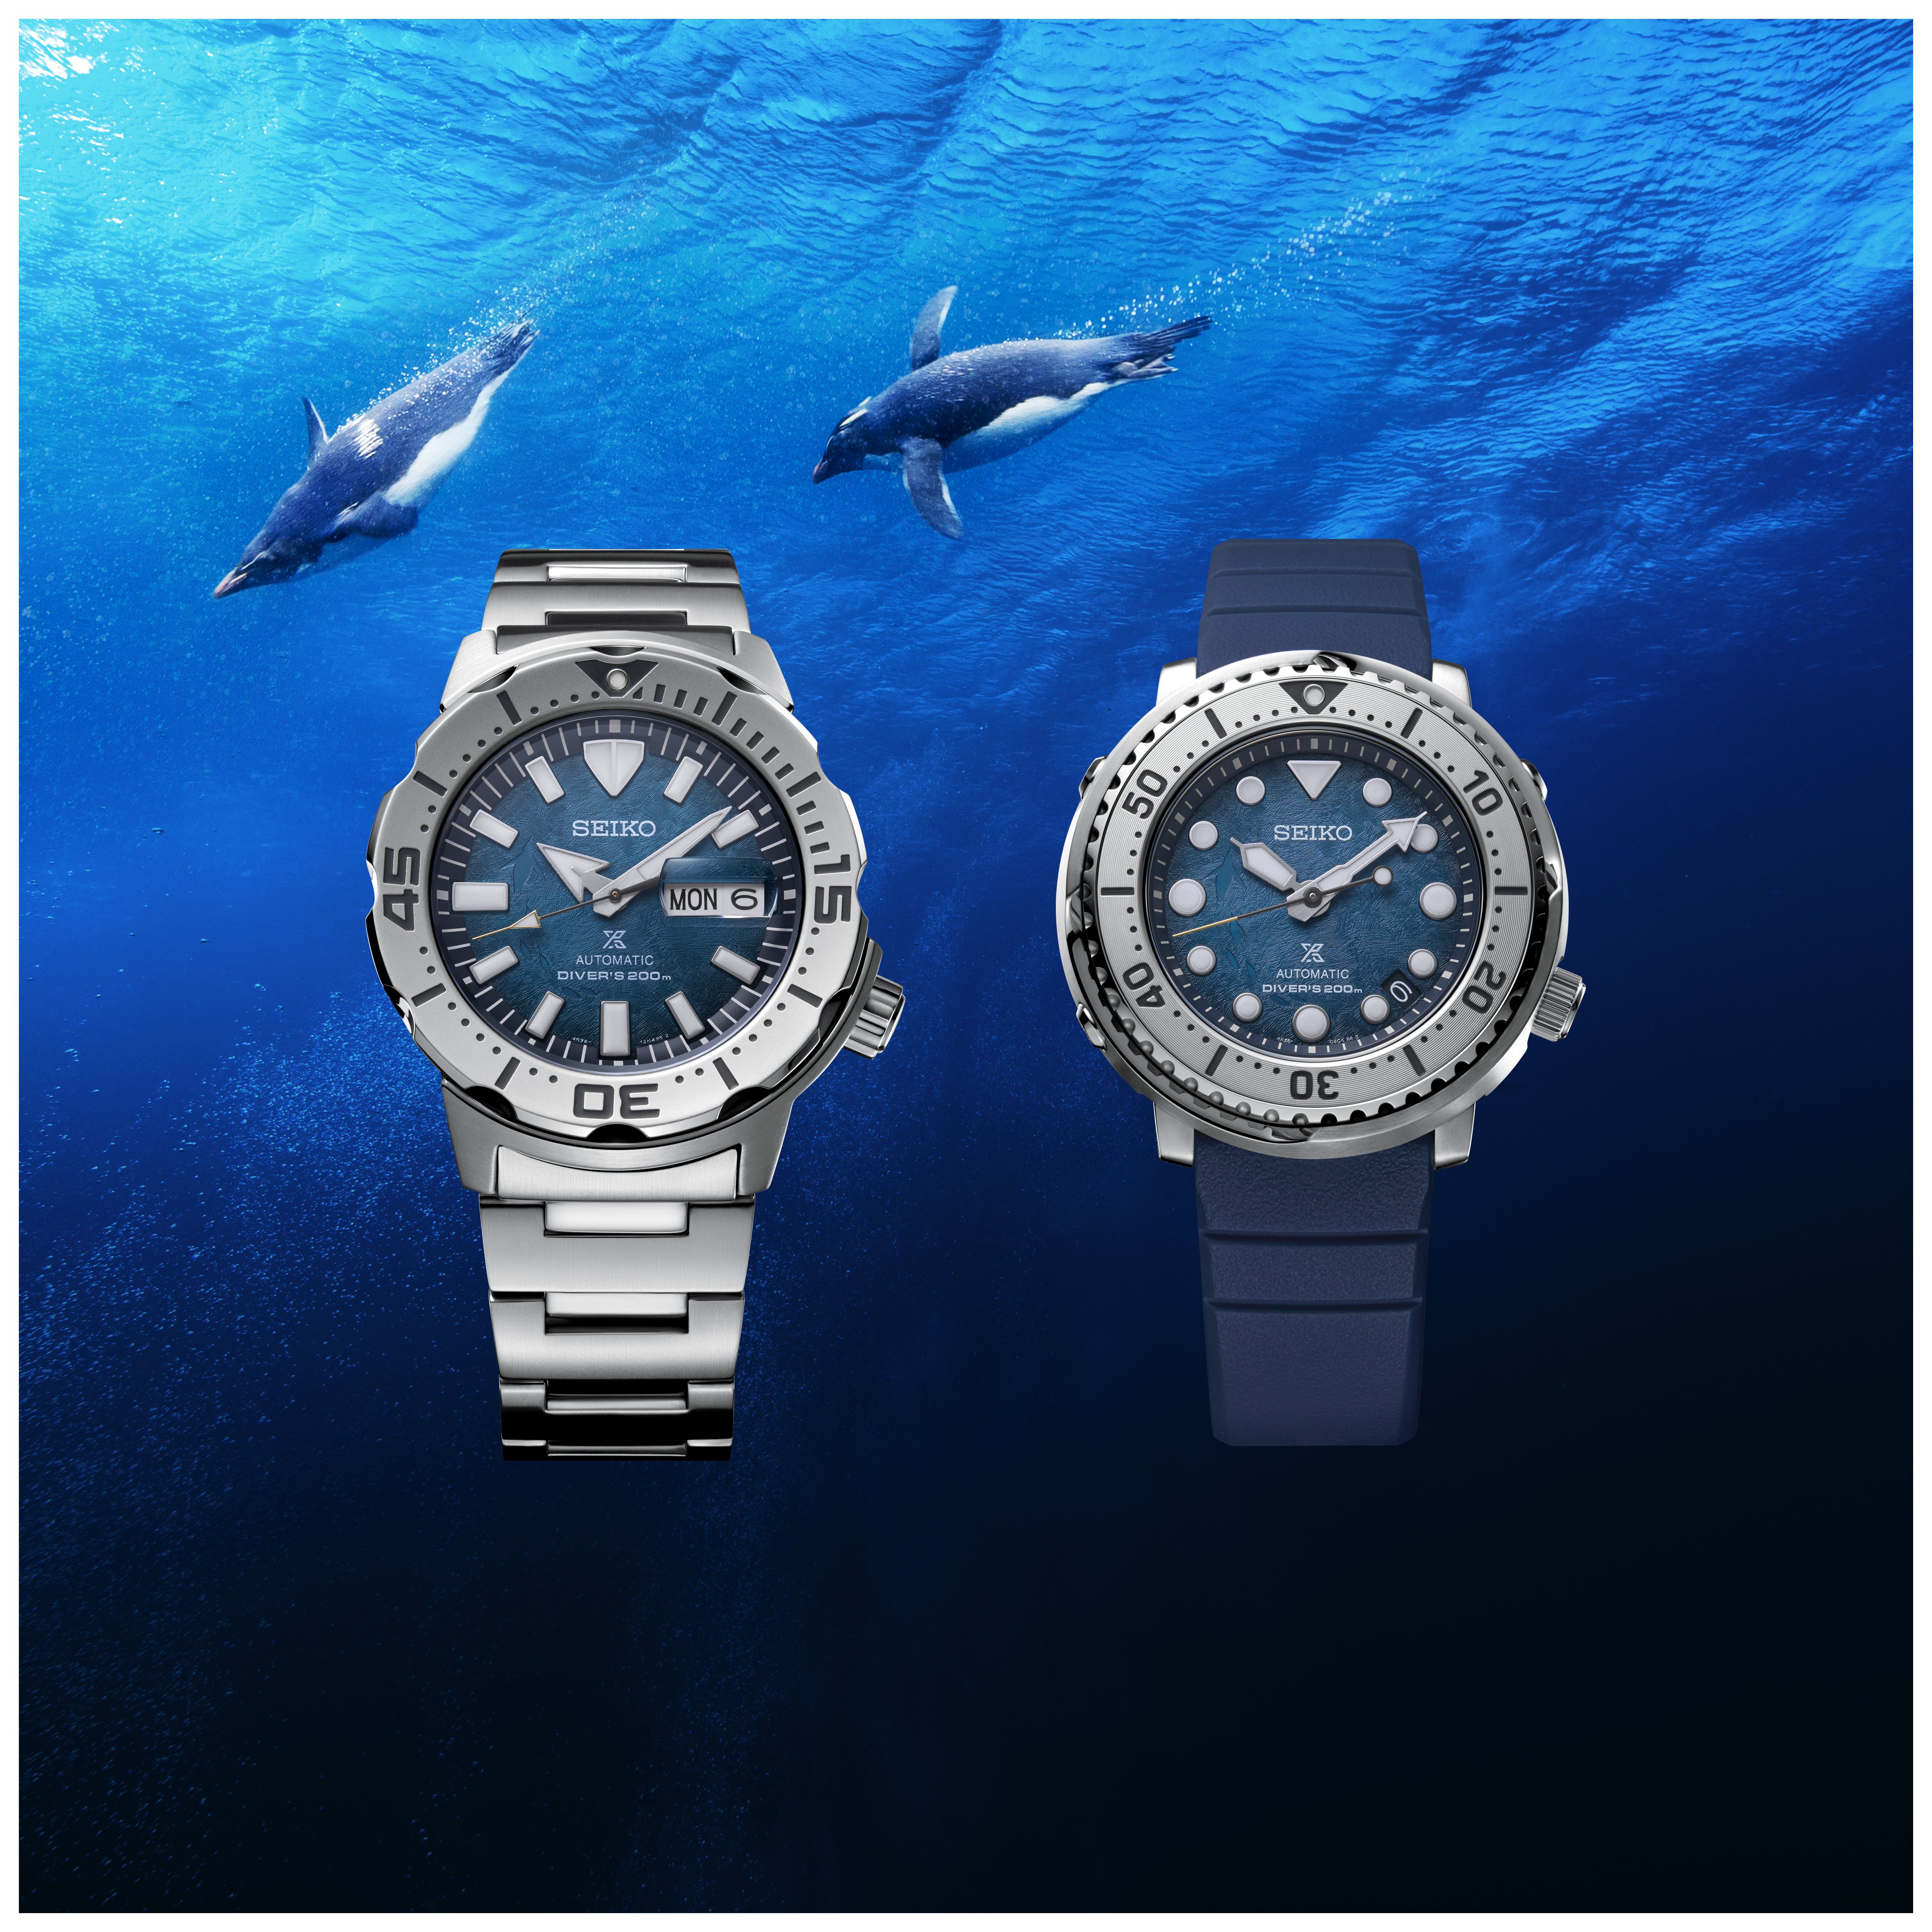 New Seiko Prospex Antarctica Watches - First Class Watches Blog